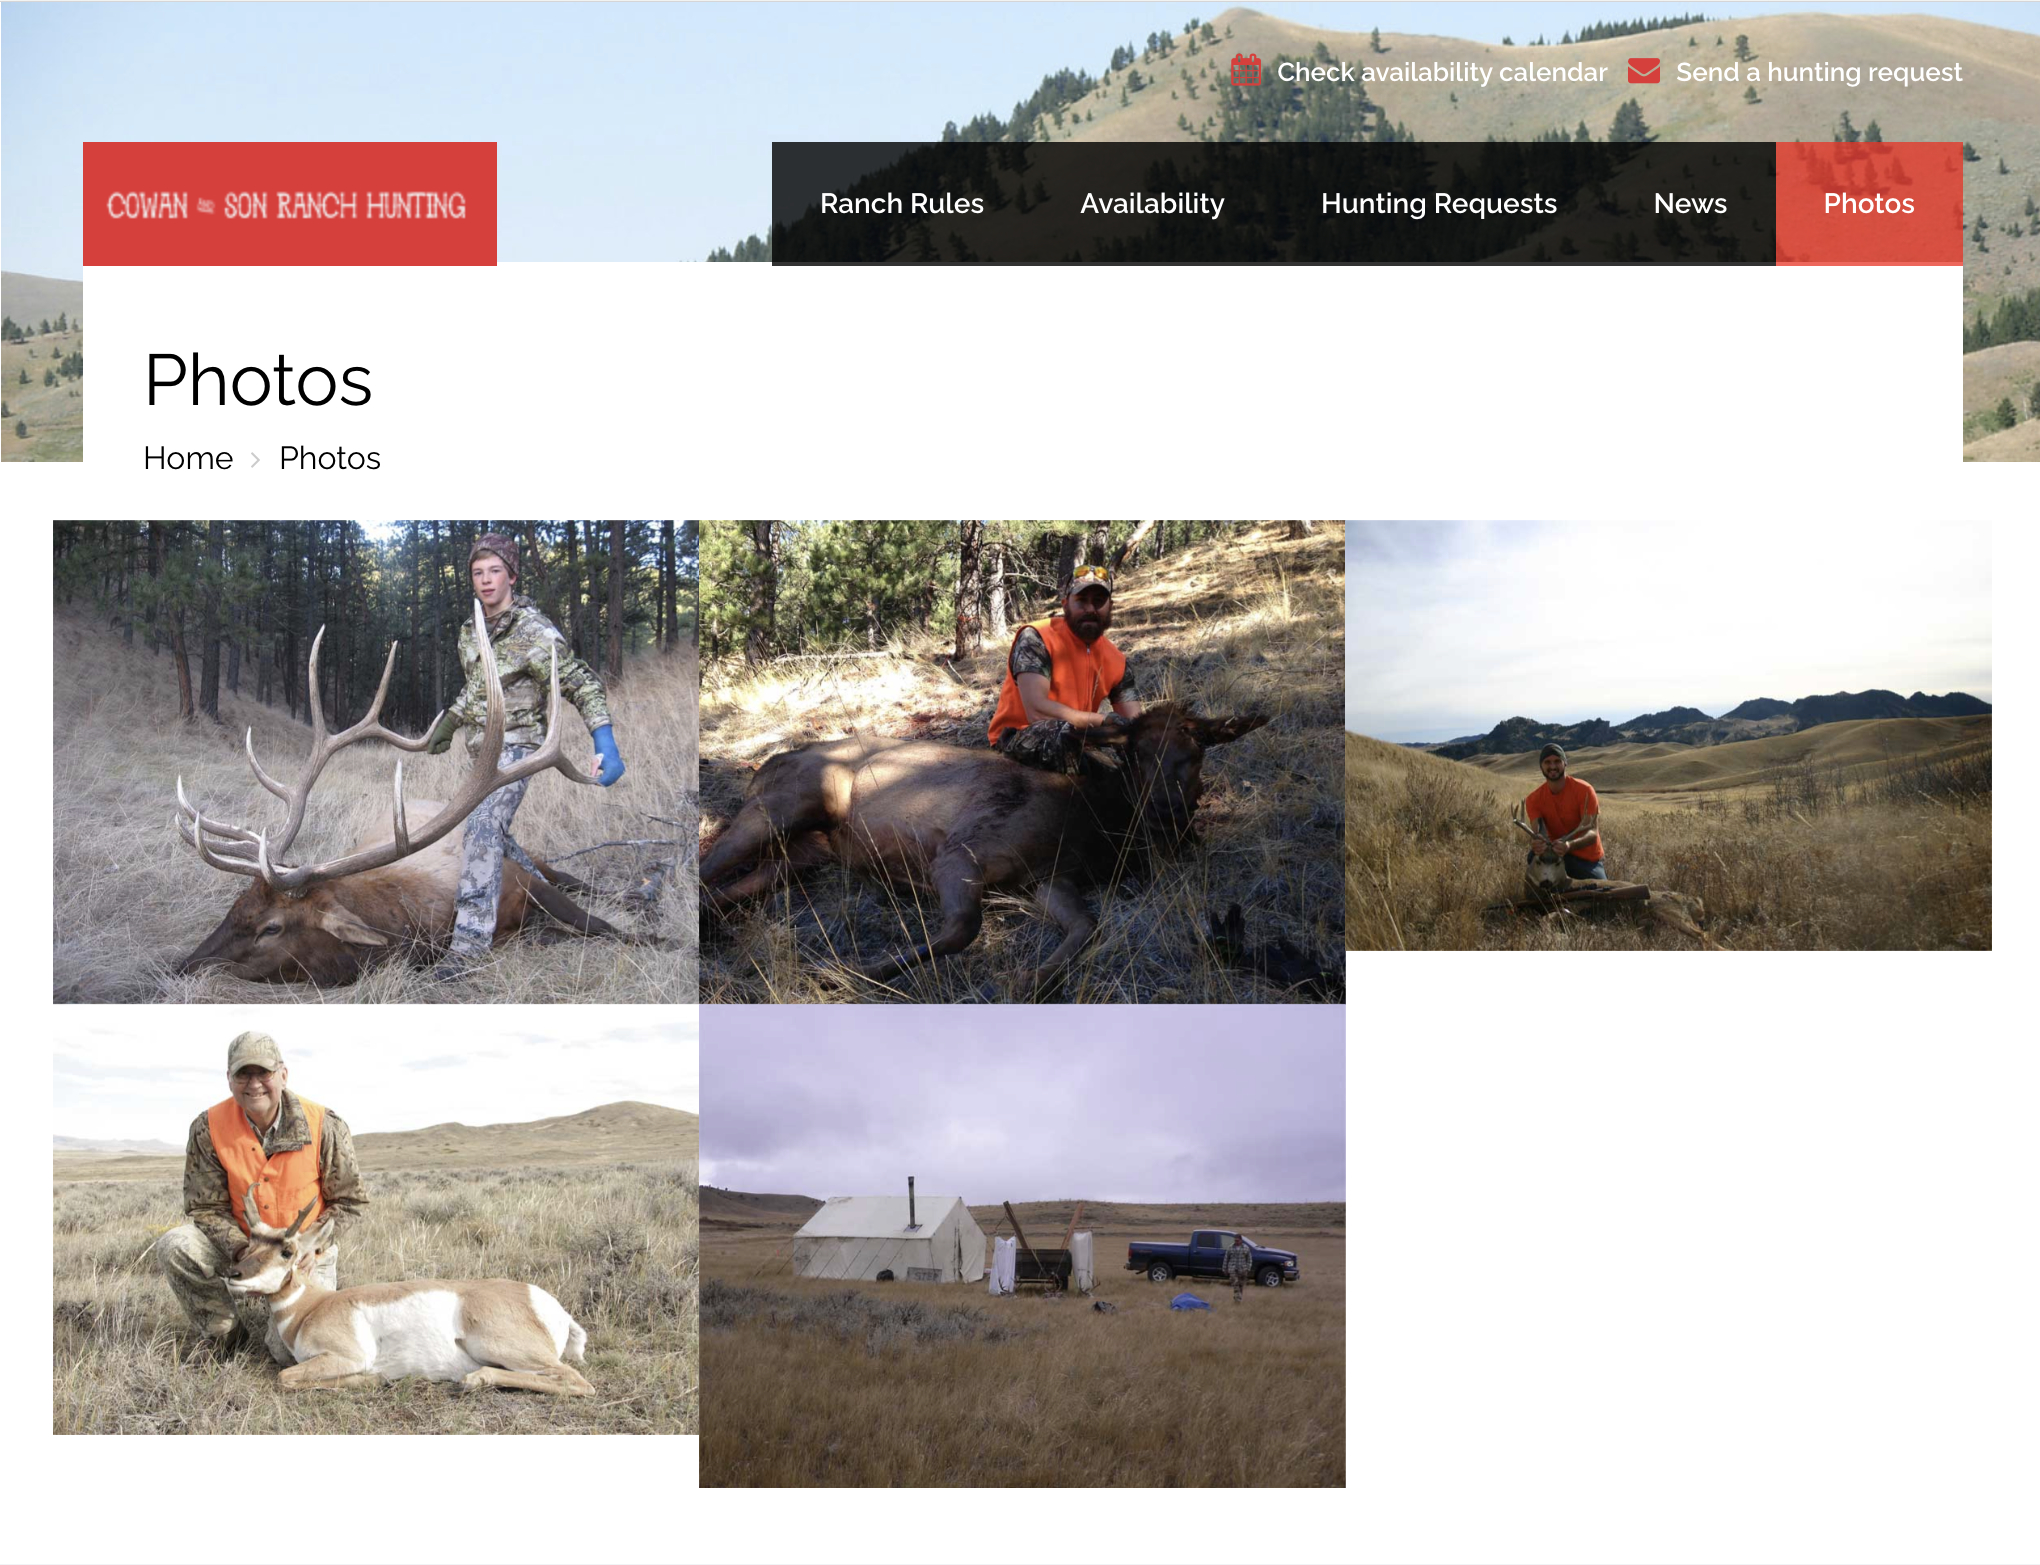 Cowan & Son Ranch Hunting screenshot